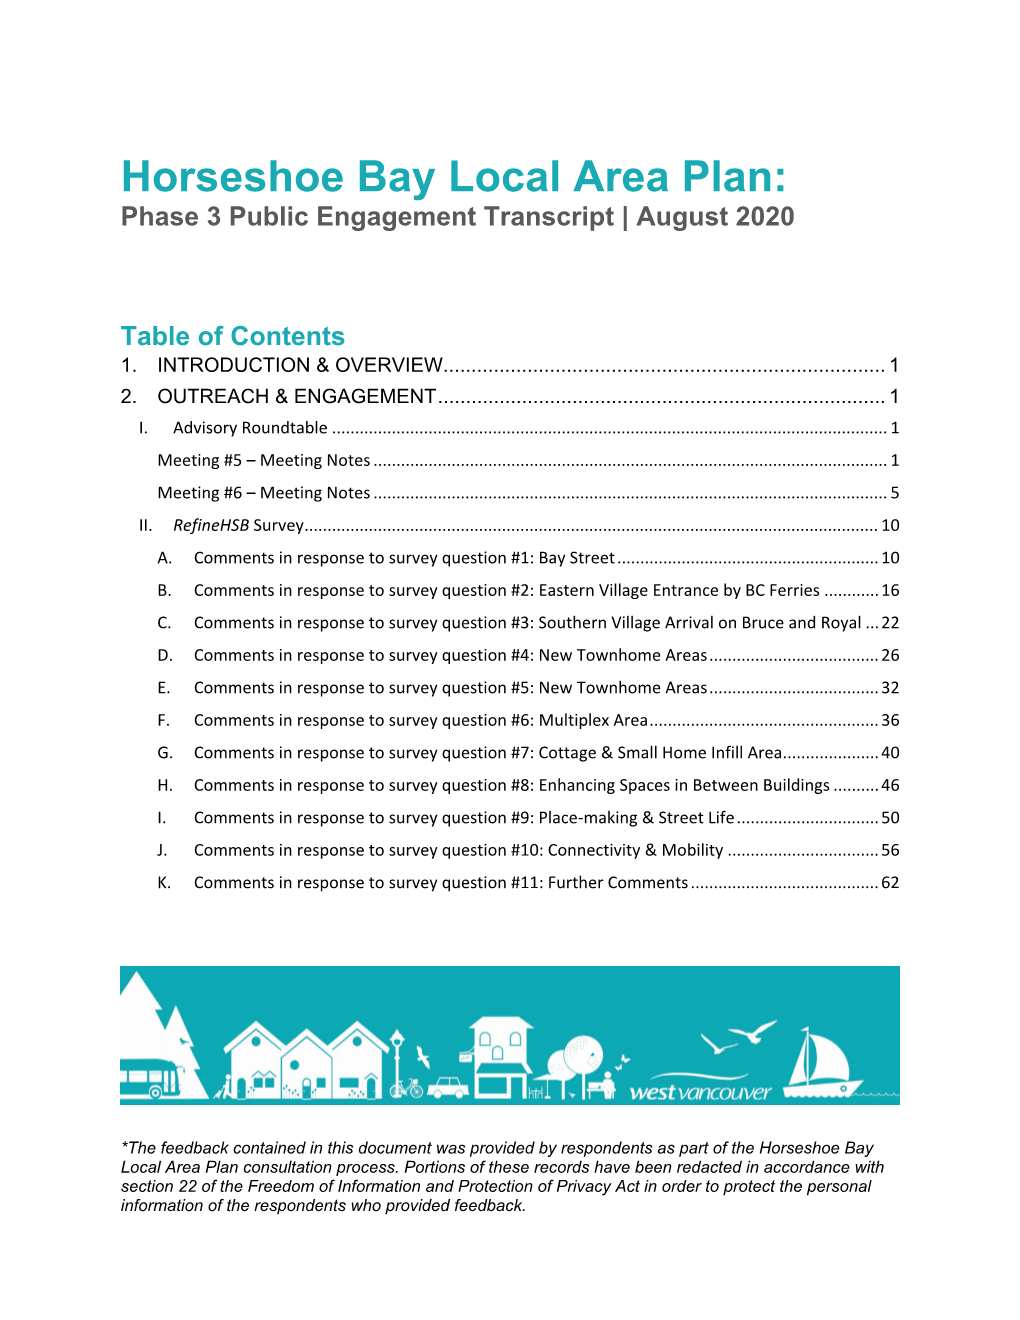 Horseshoe Bay Local Area Plan: Phase 3 Transcript